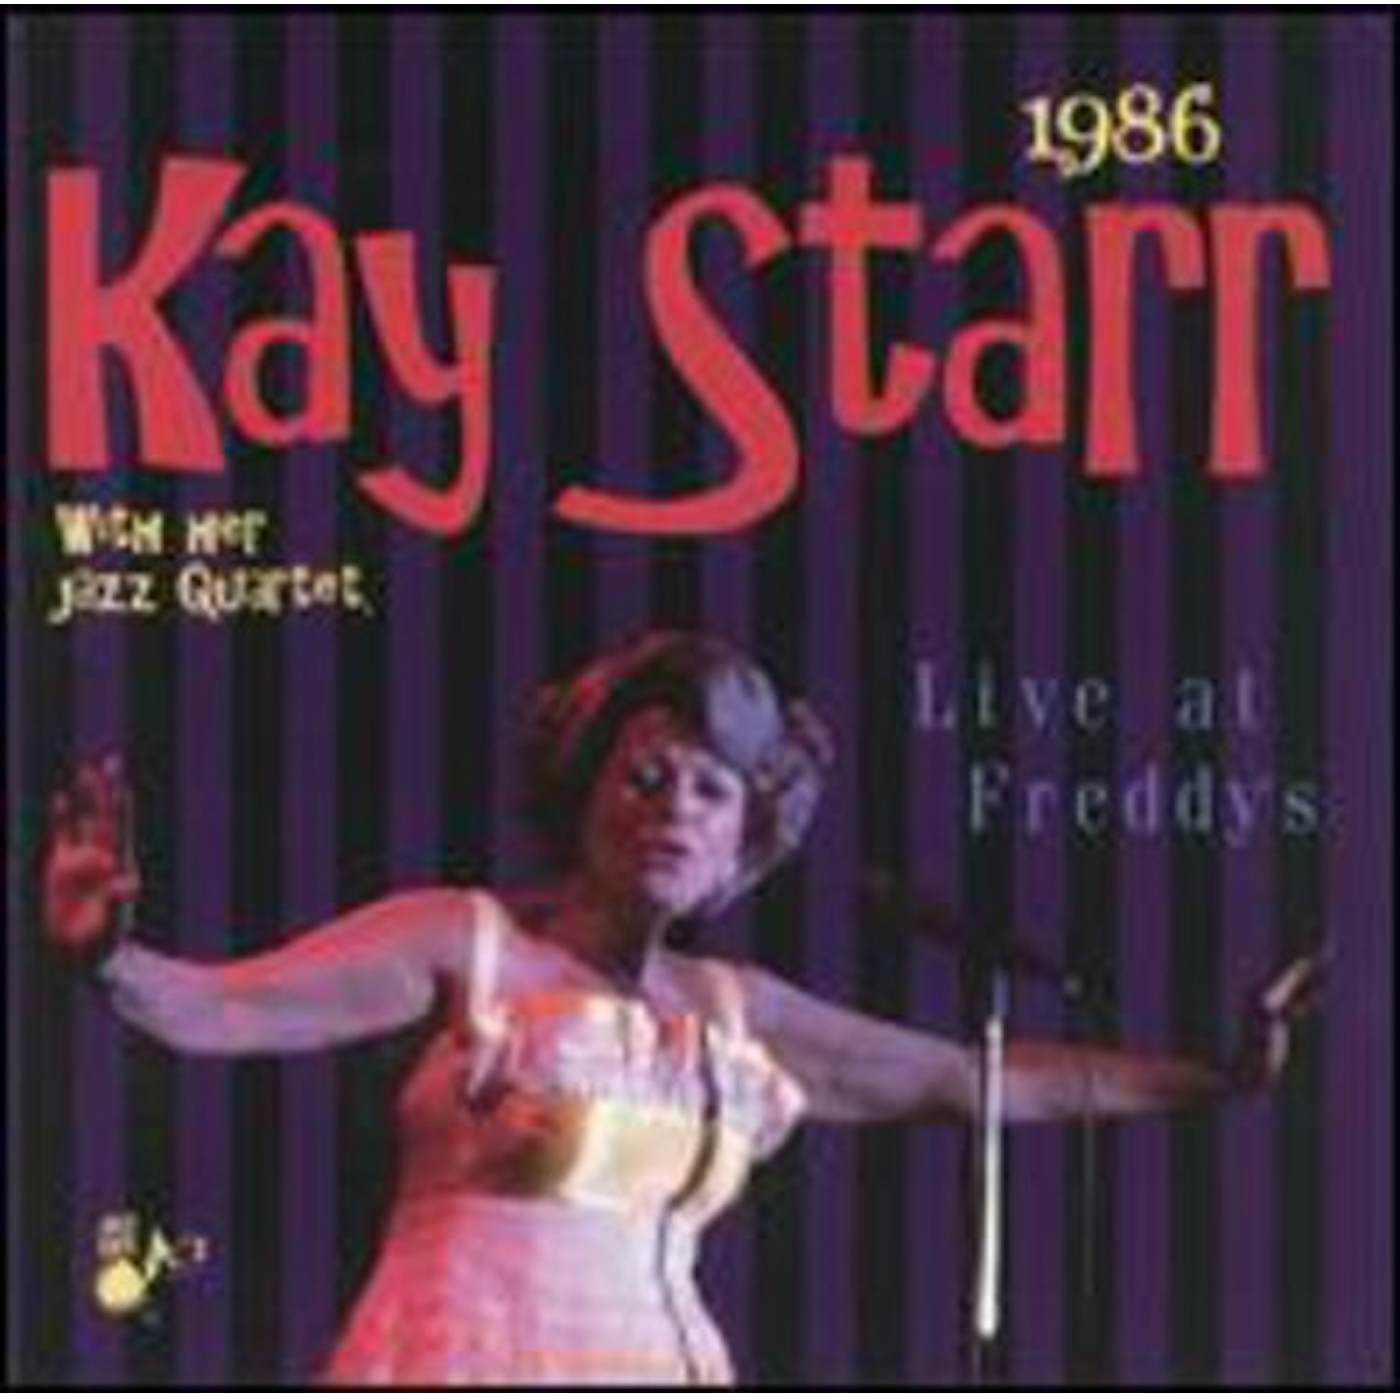 Kay Starr LIVE AT FREDDY'S CD